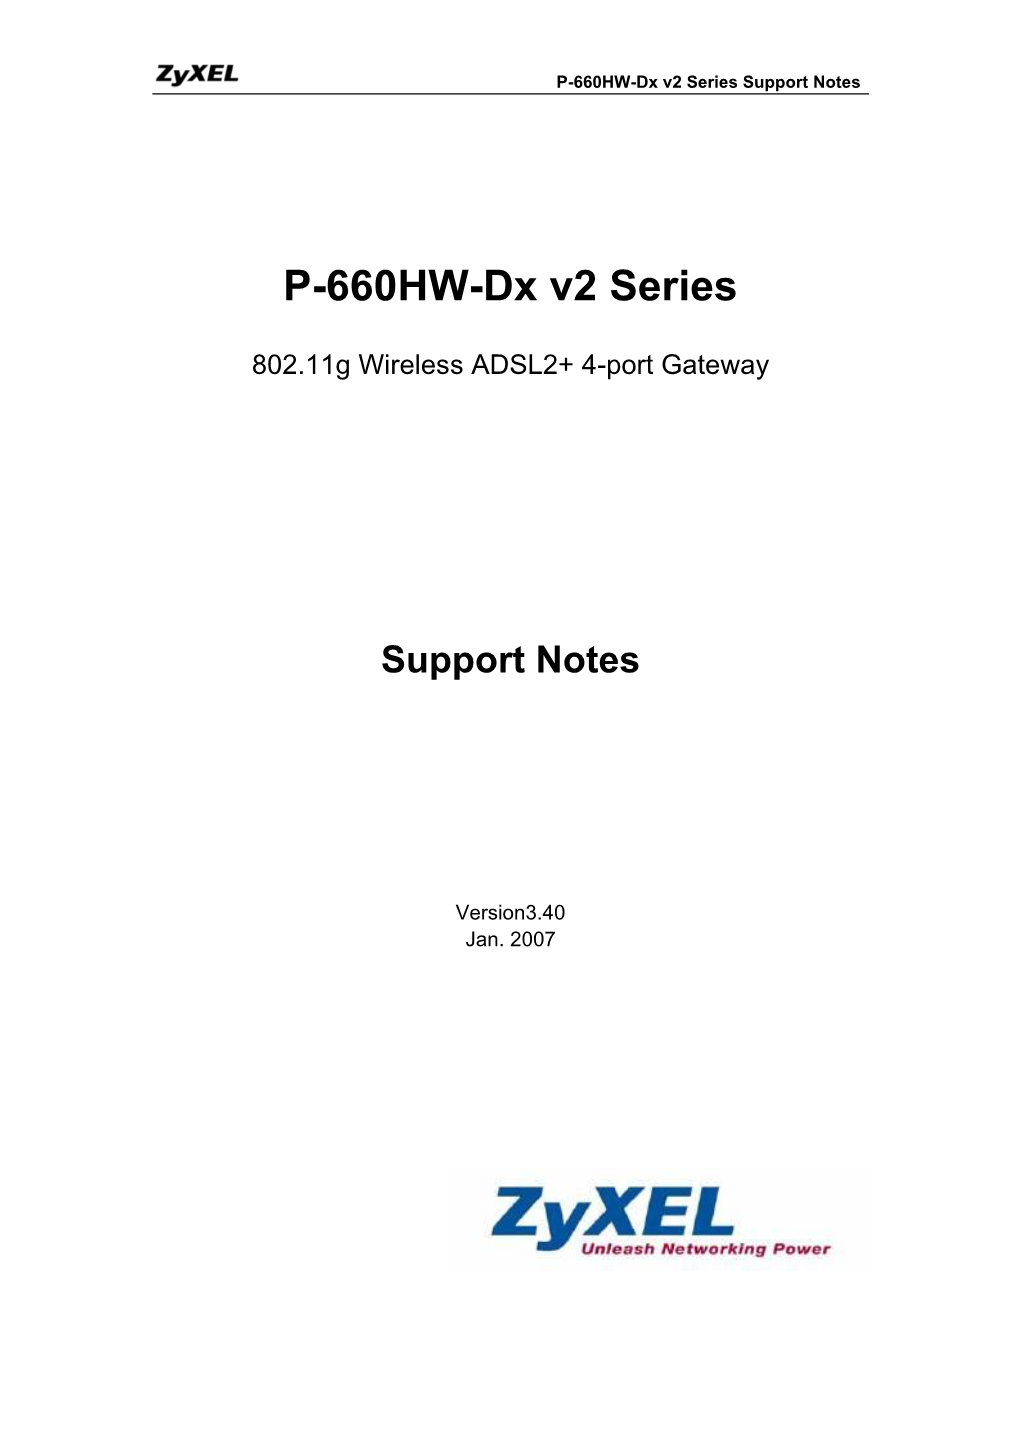 P-660HW-Dx V2 Series Support Notes